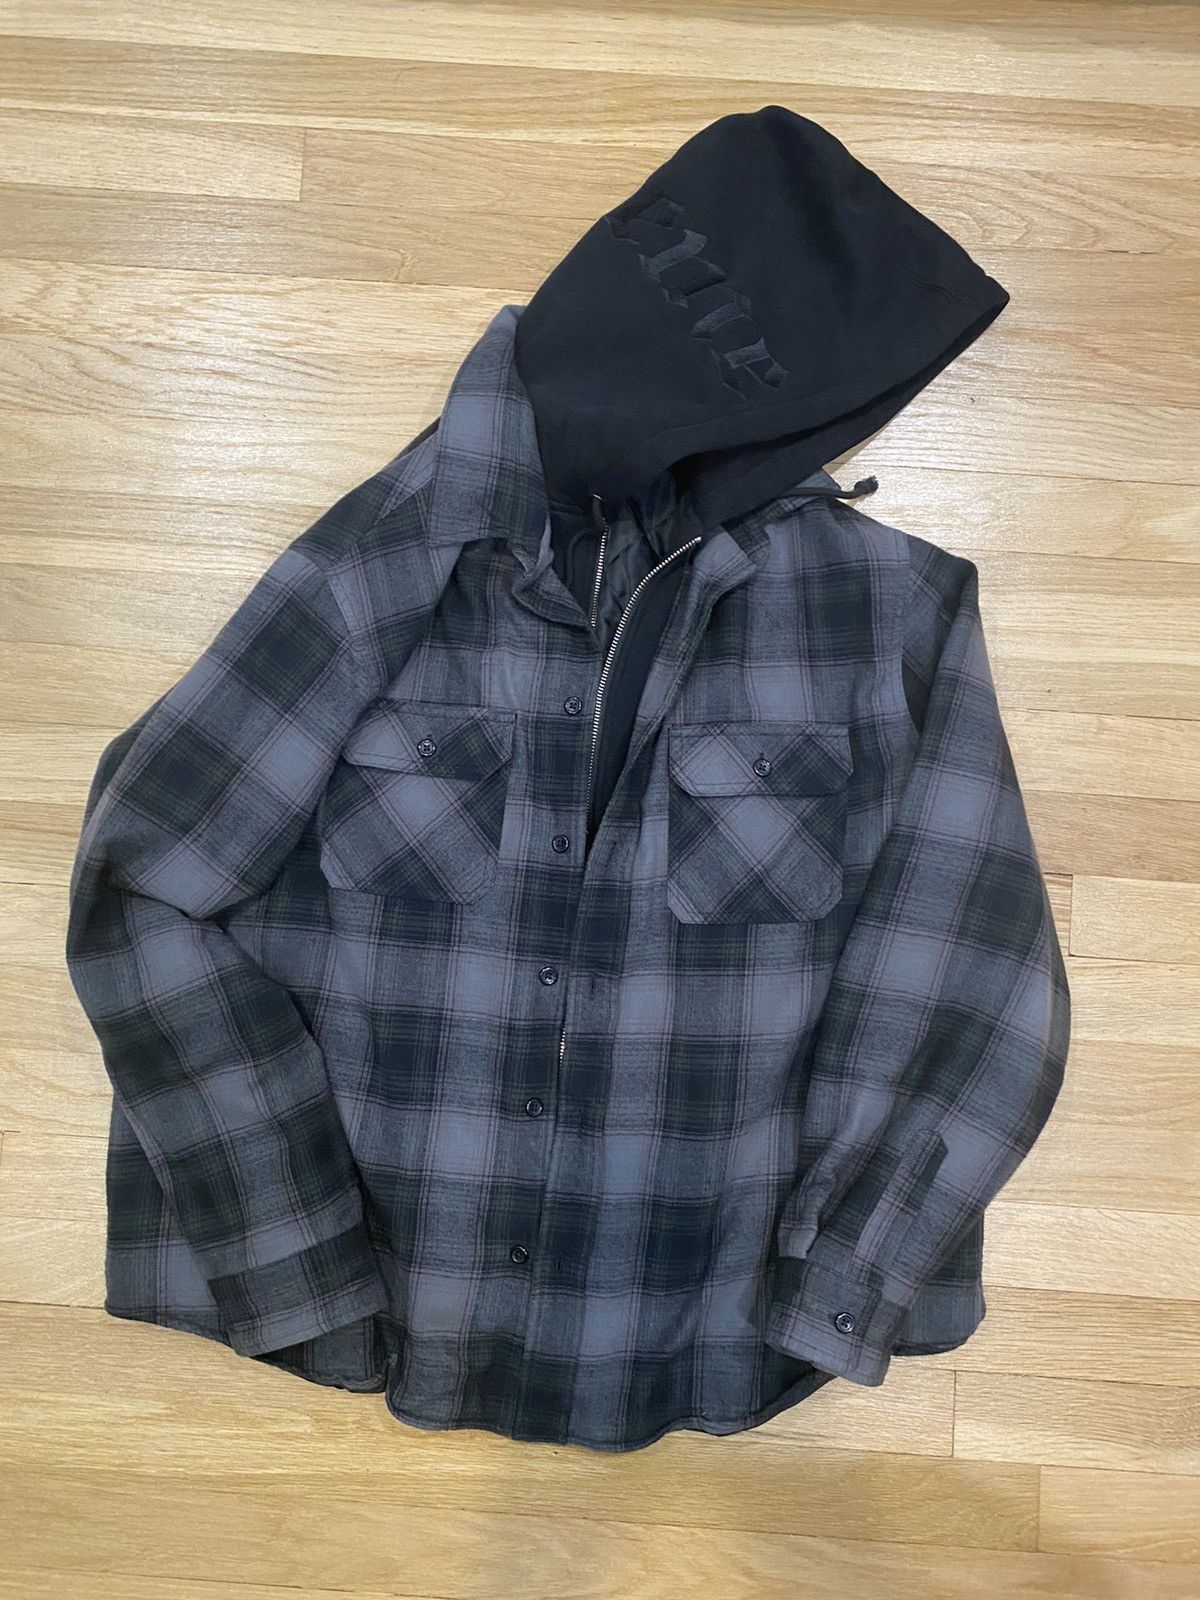 Supreme Supreme Hooded Flannel Zip Up Shirt Black | Grailed